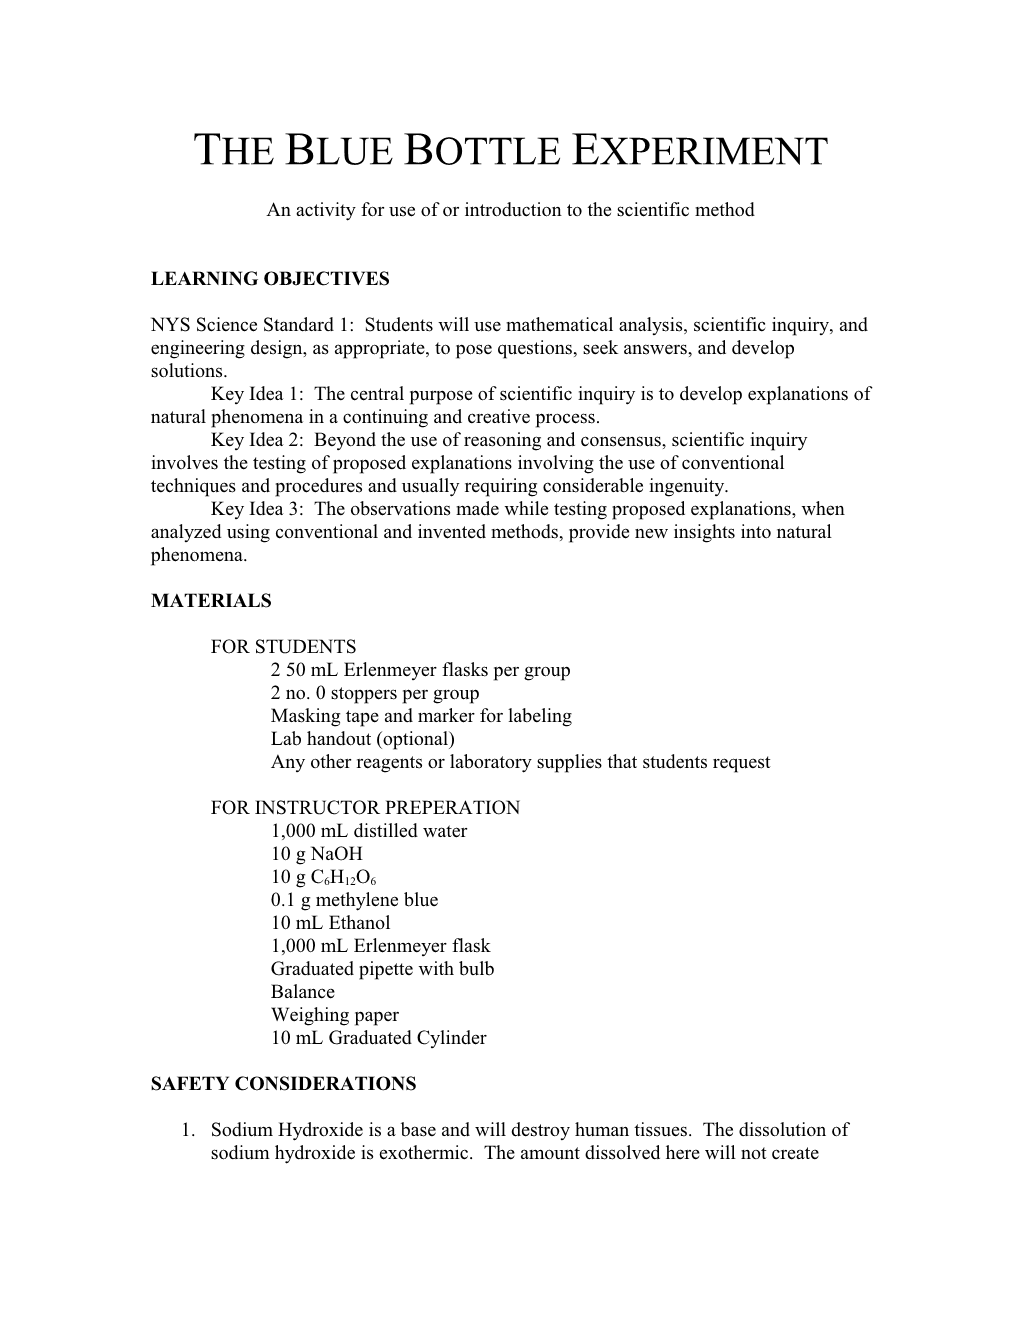 The Blue Bottle Experiment